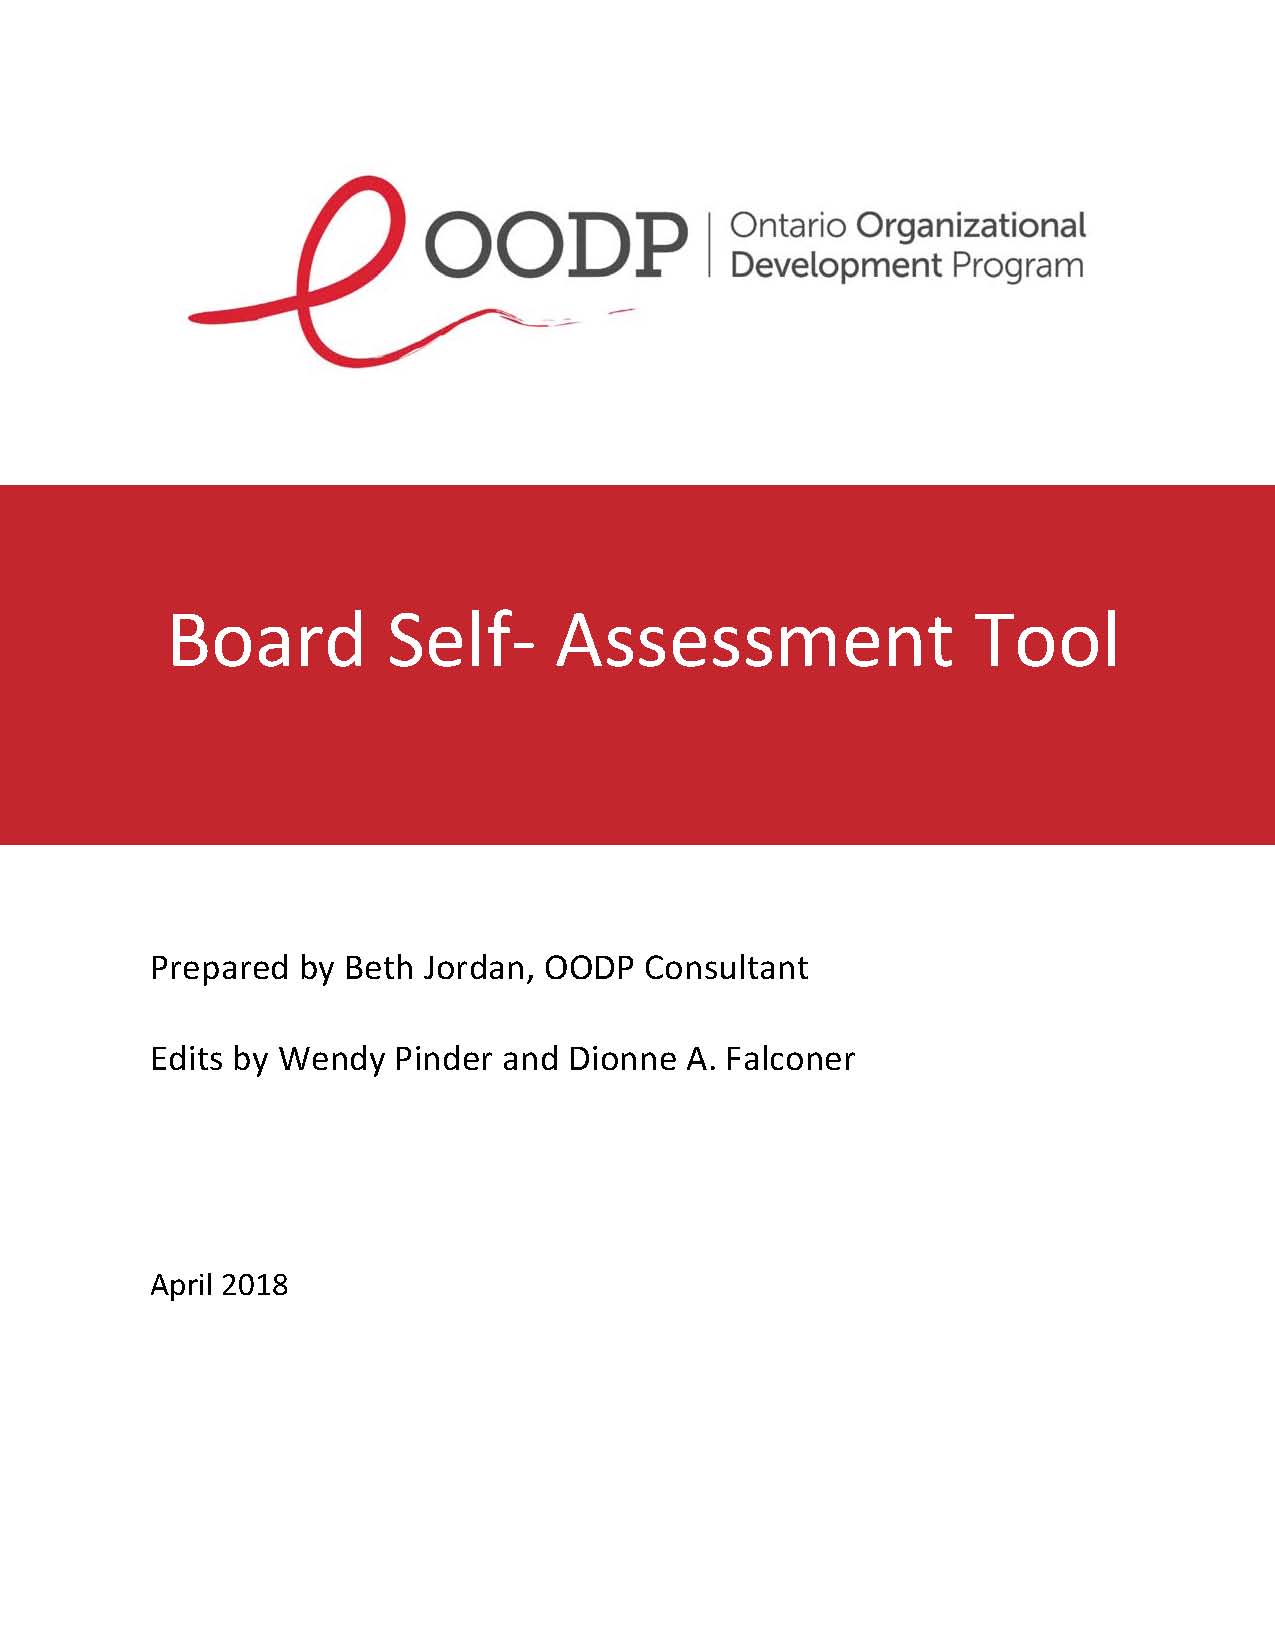 OODP Board Self-Assessment Tool